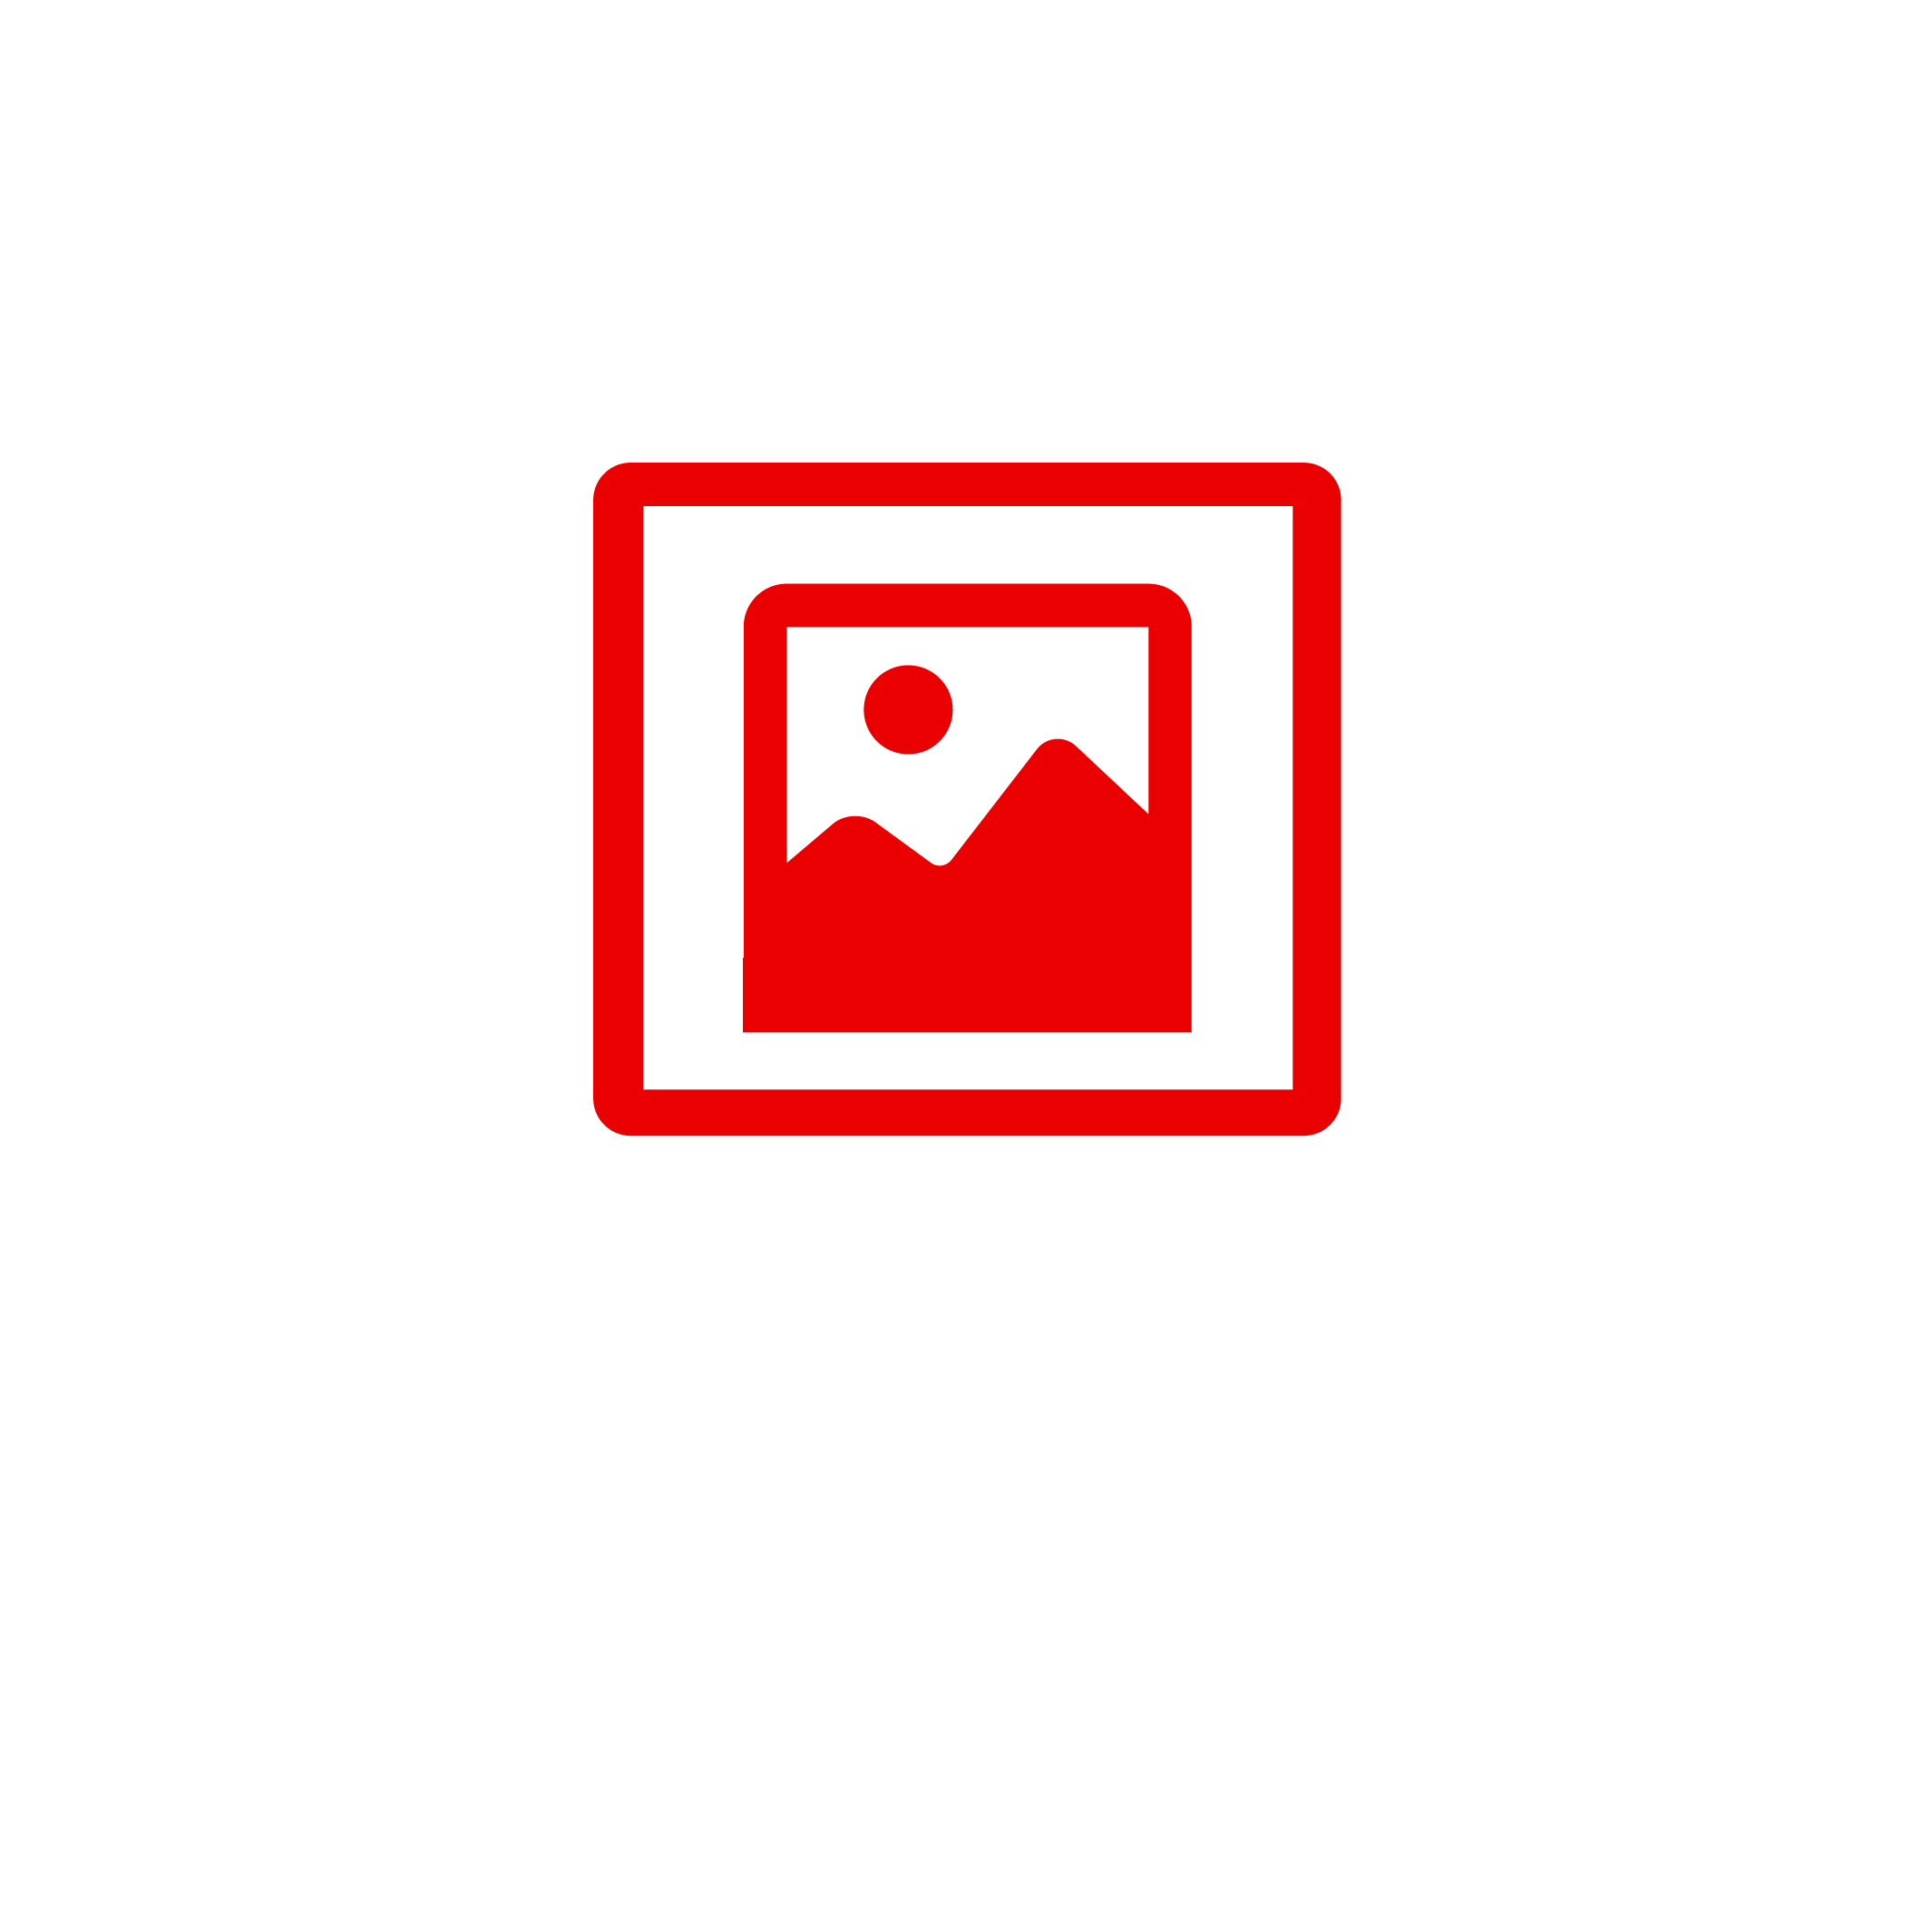 Organic Posts